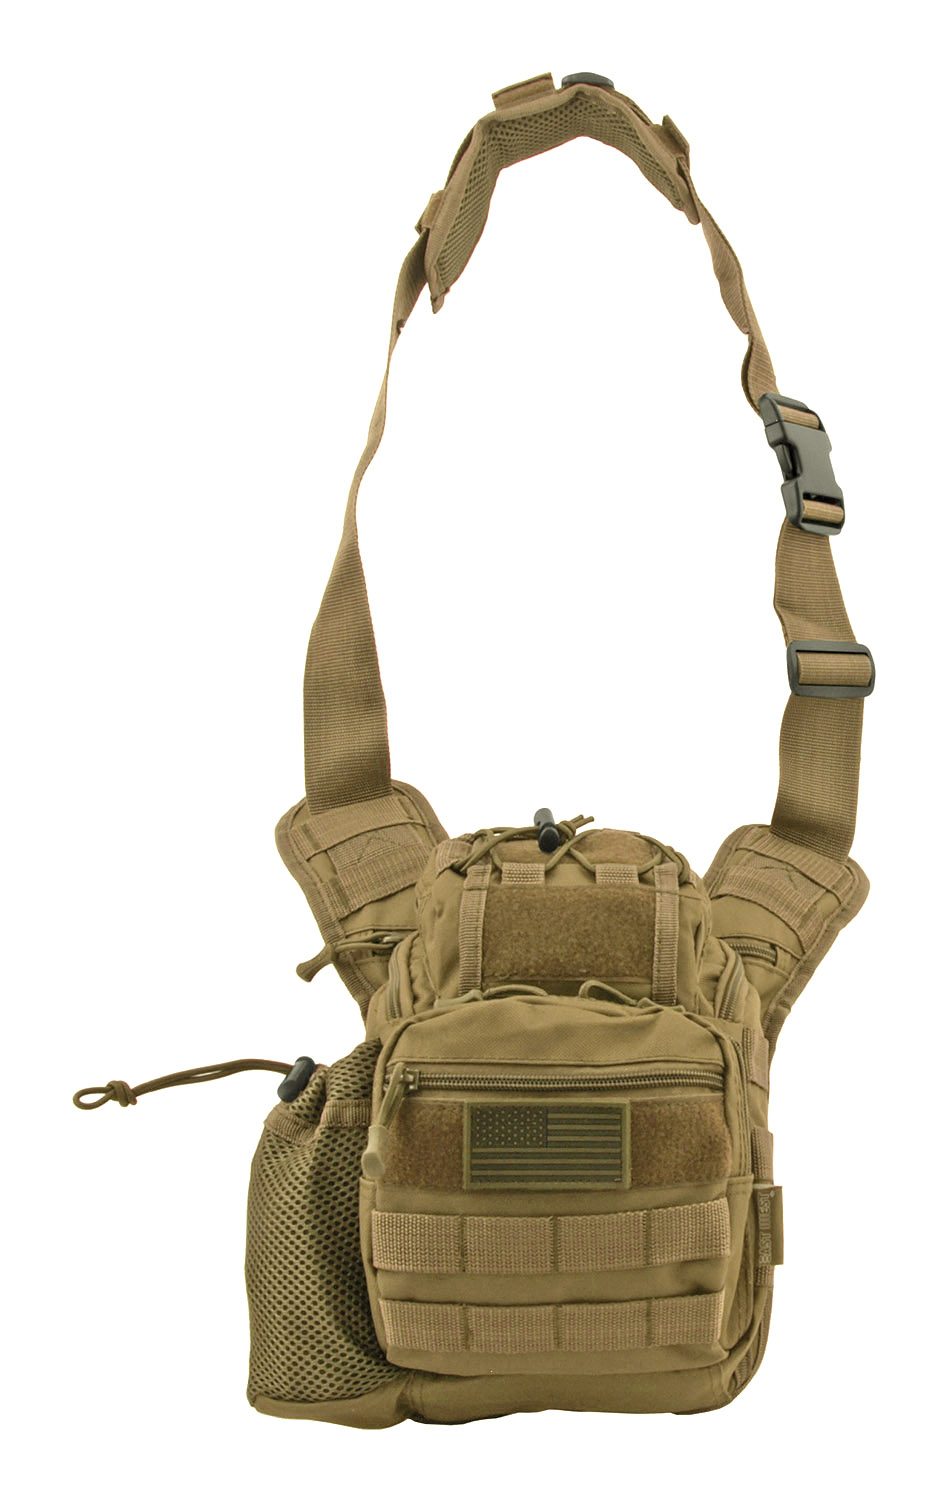 Tour of Duty Tactical Over Shoulder Everyday Carry Hip Bag - Desert Tan